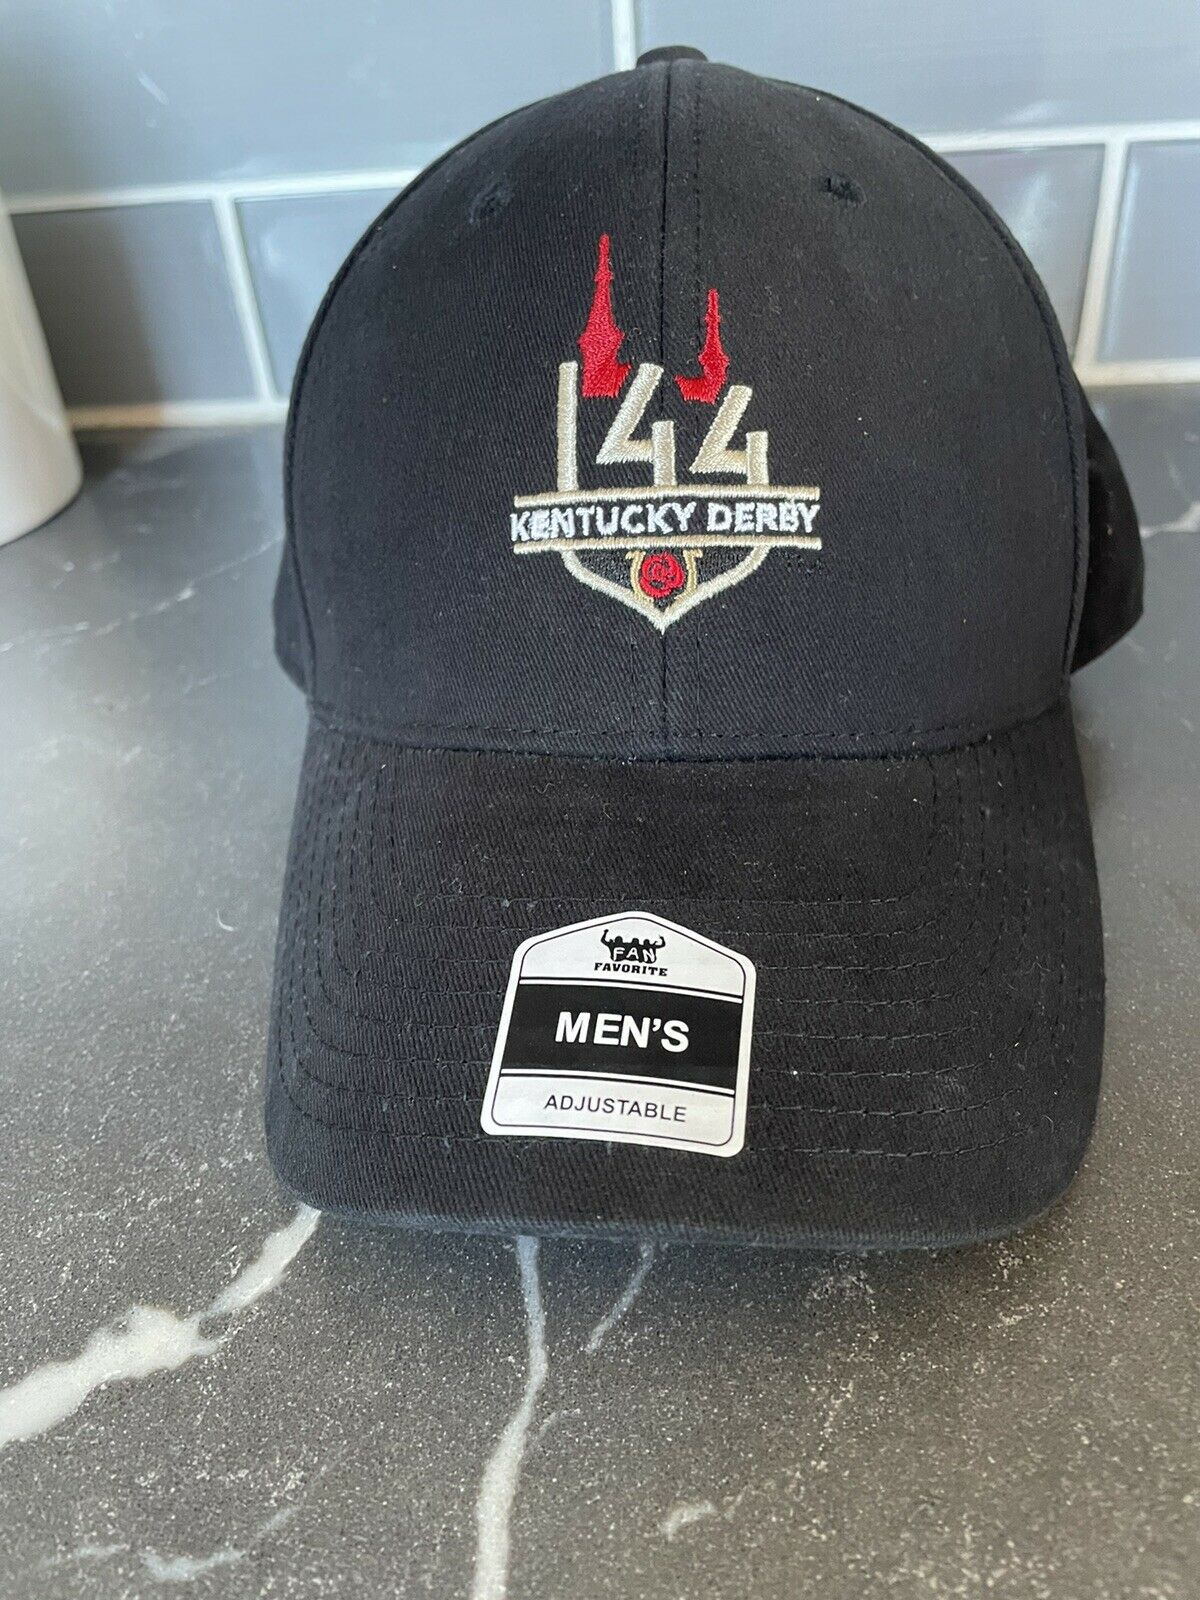 2018 Kentucky Derby Cap/hat 144th Kentucky Promo Hat ~excellent